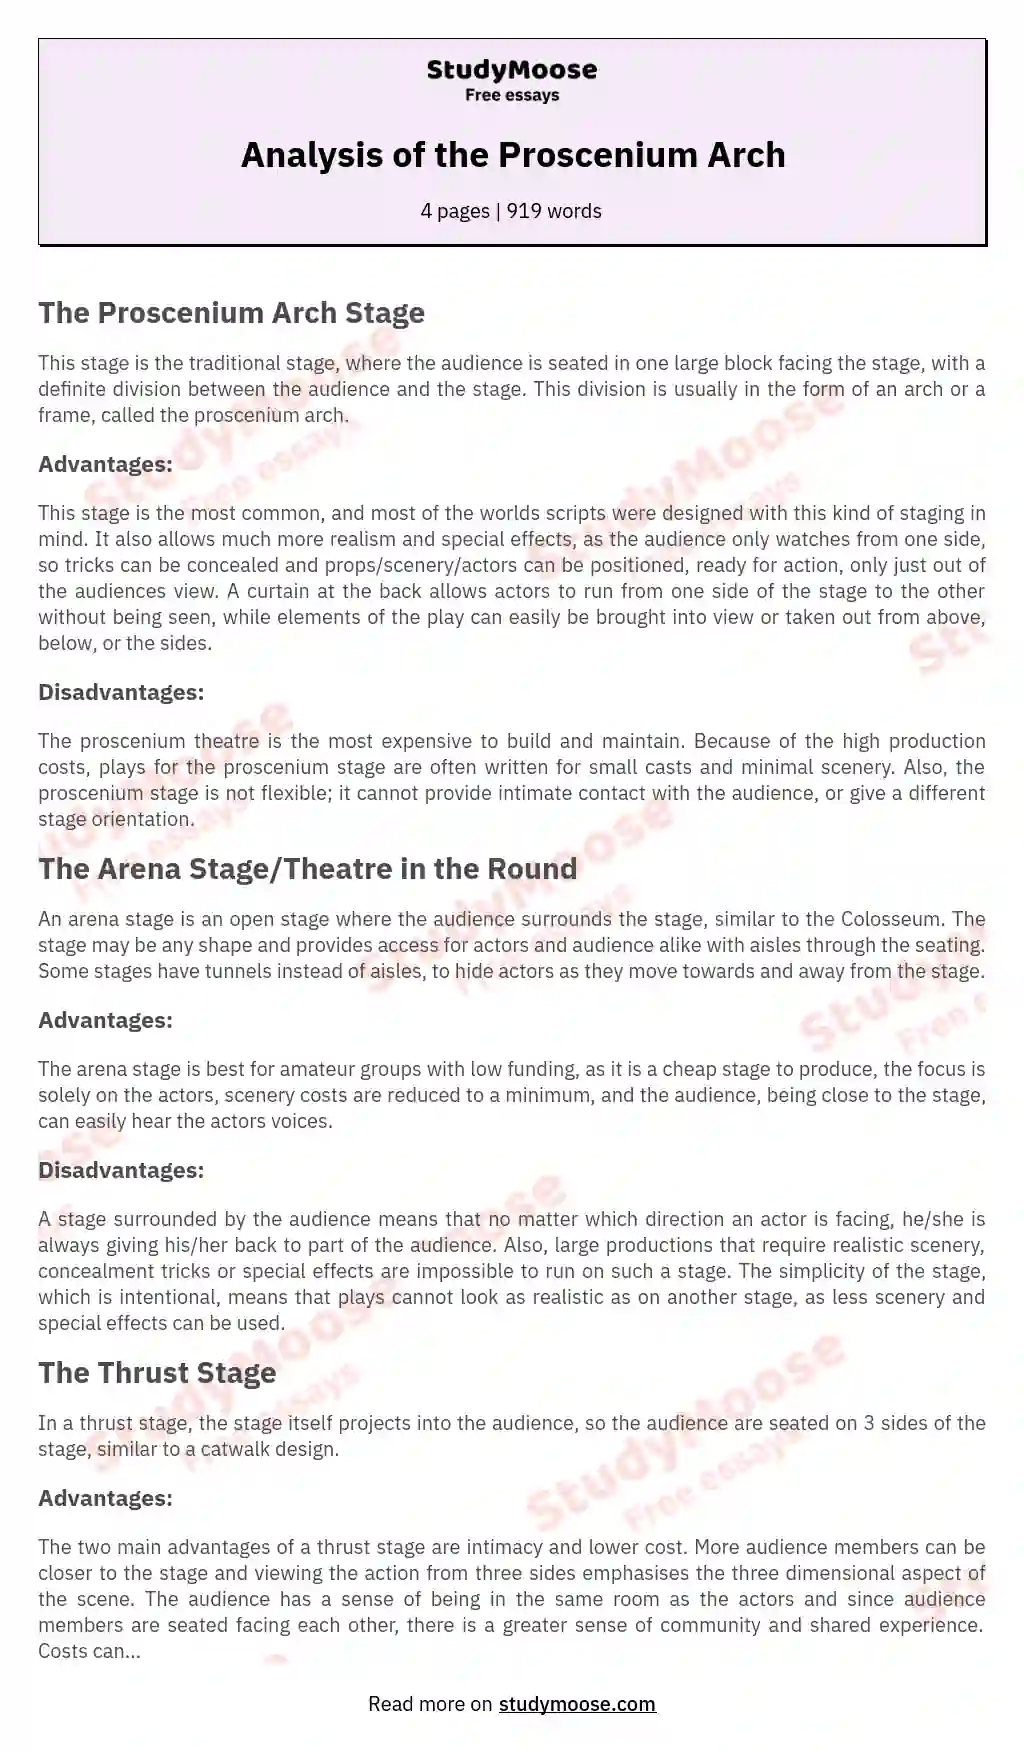 Analysis of the Proscenium Arch essay